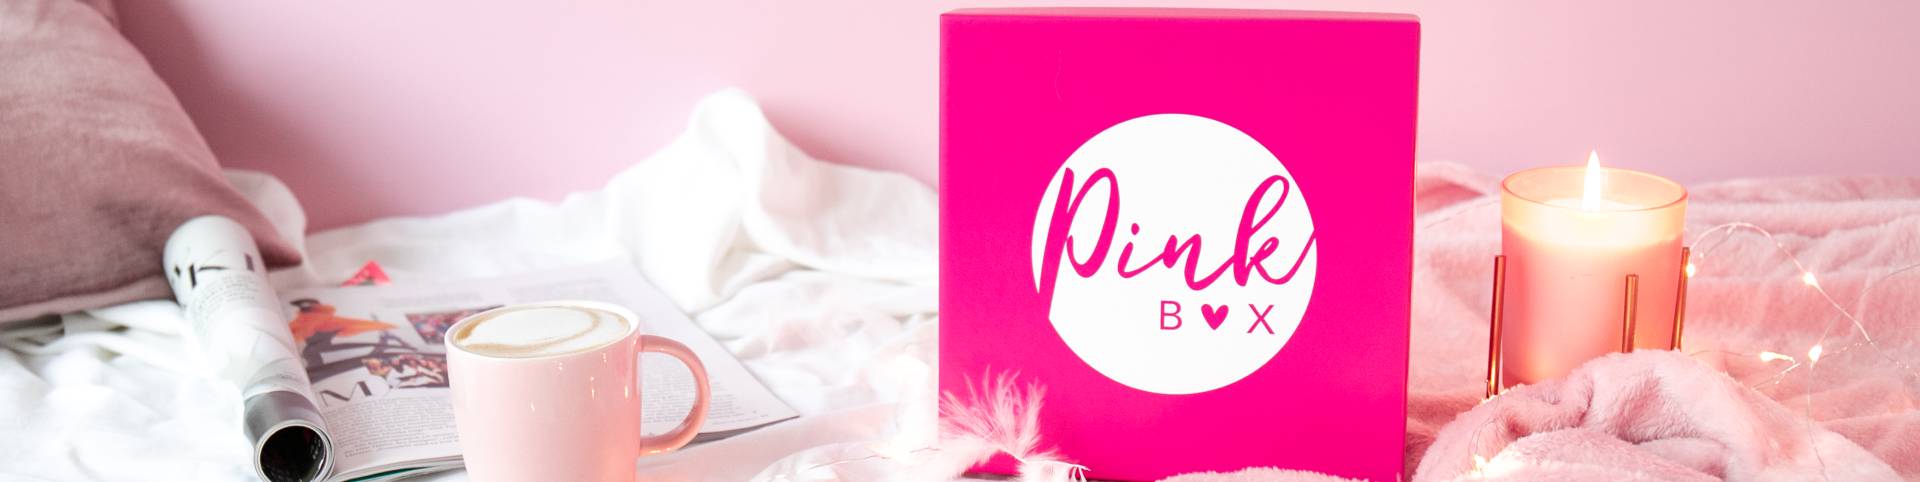 Pink Box Sleeping Beauty 2019